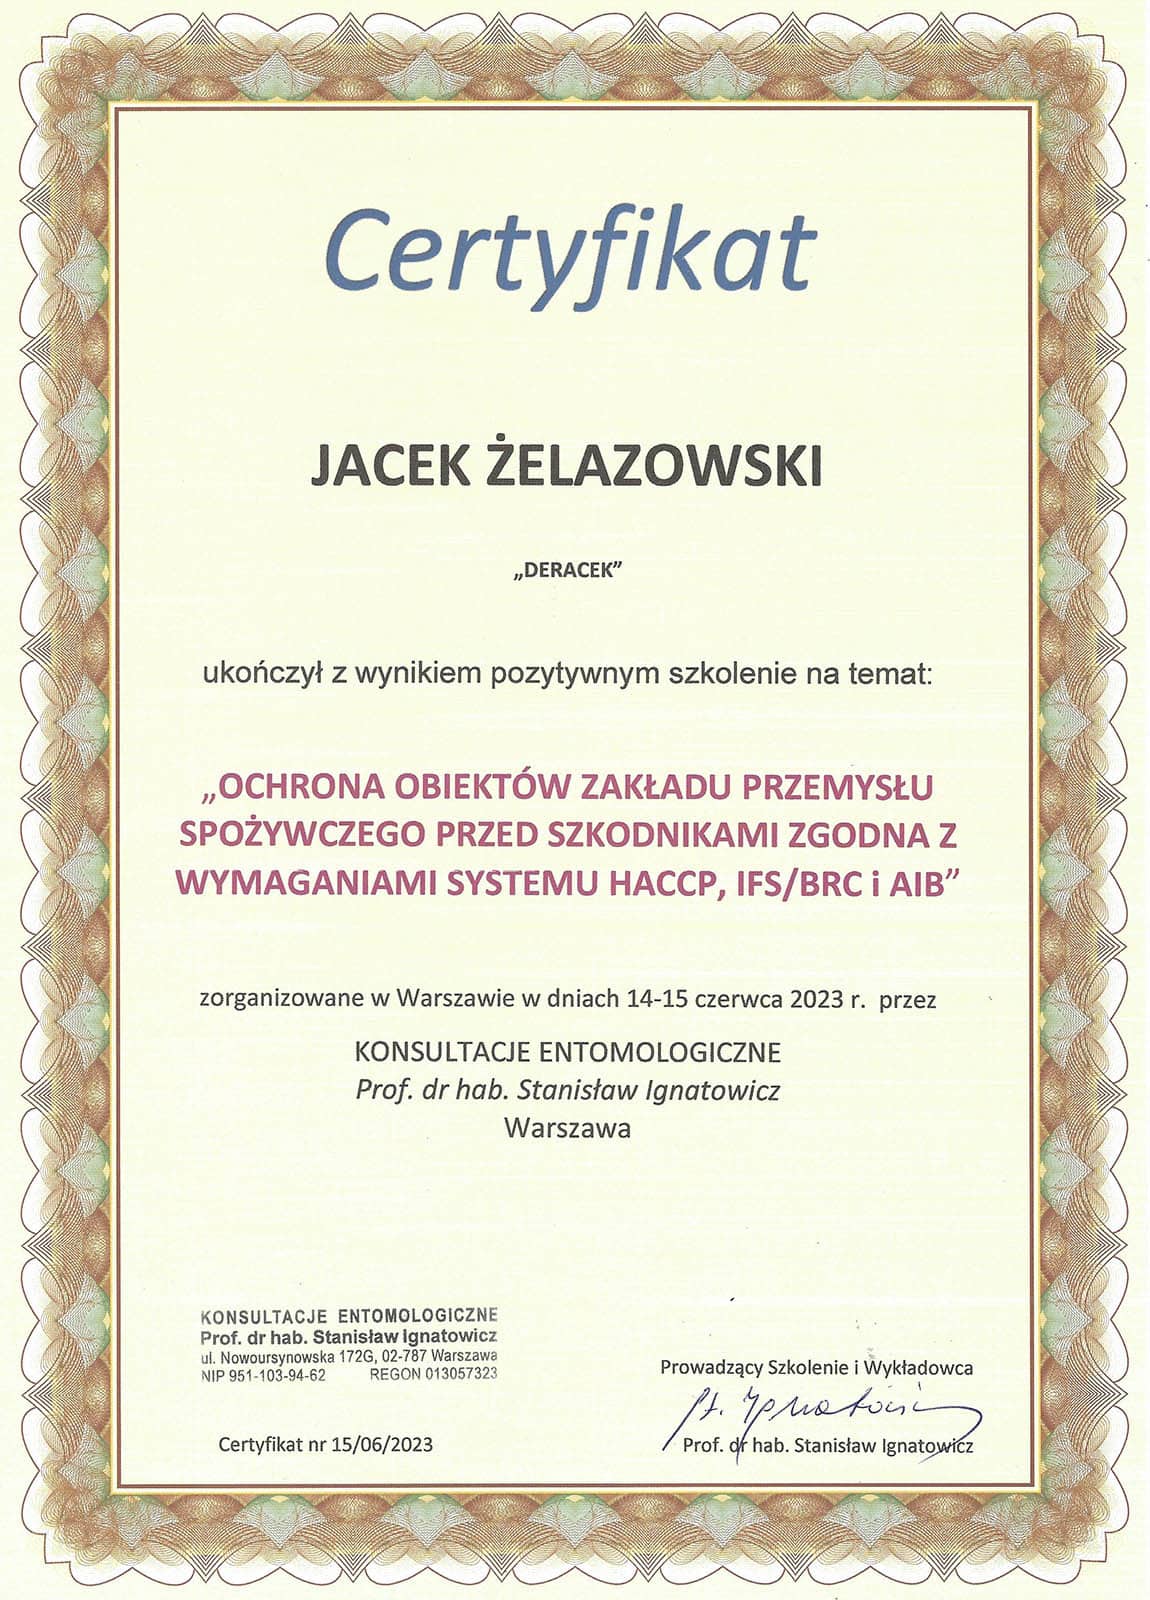 Certyfikat HACCP, IFS/BRC i AIB - Deracek Tarczyn, Warszawa